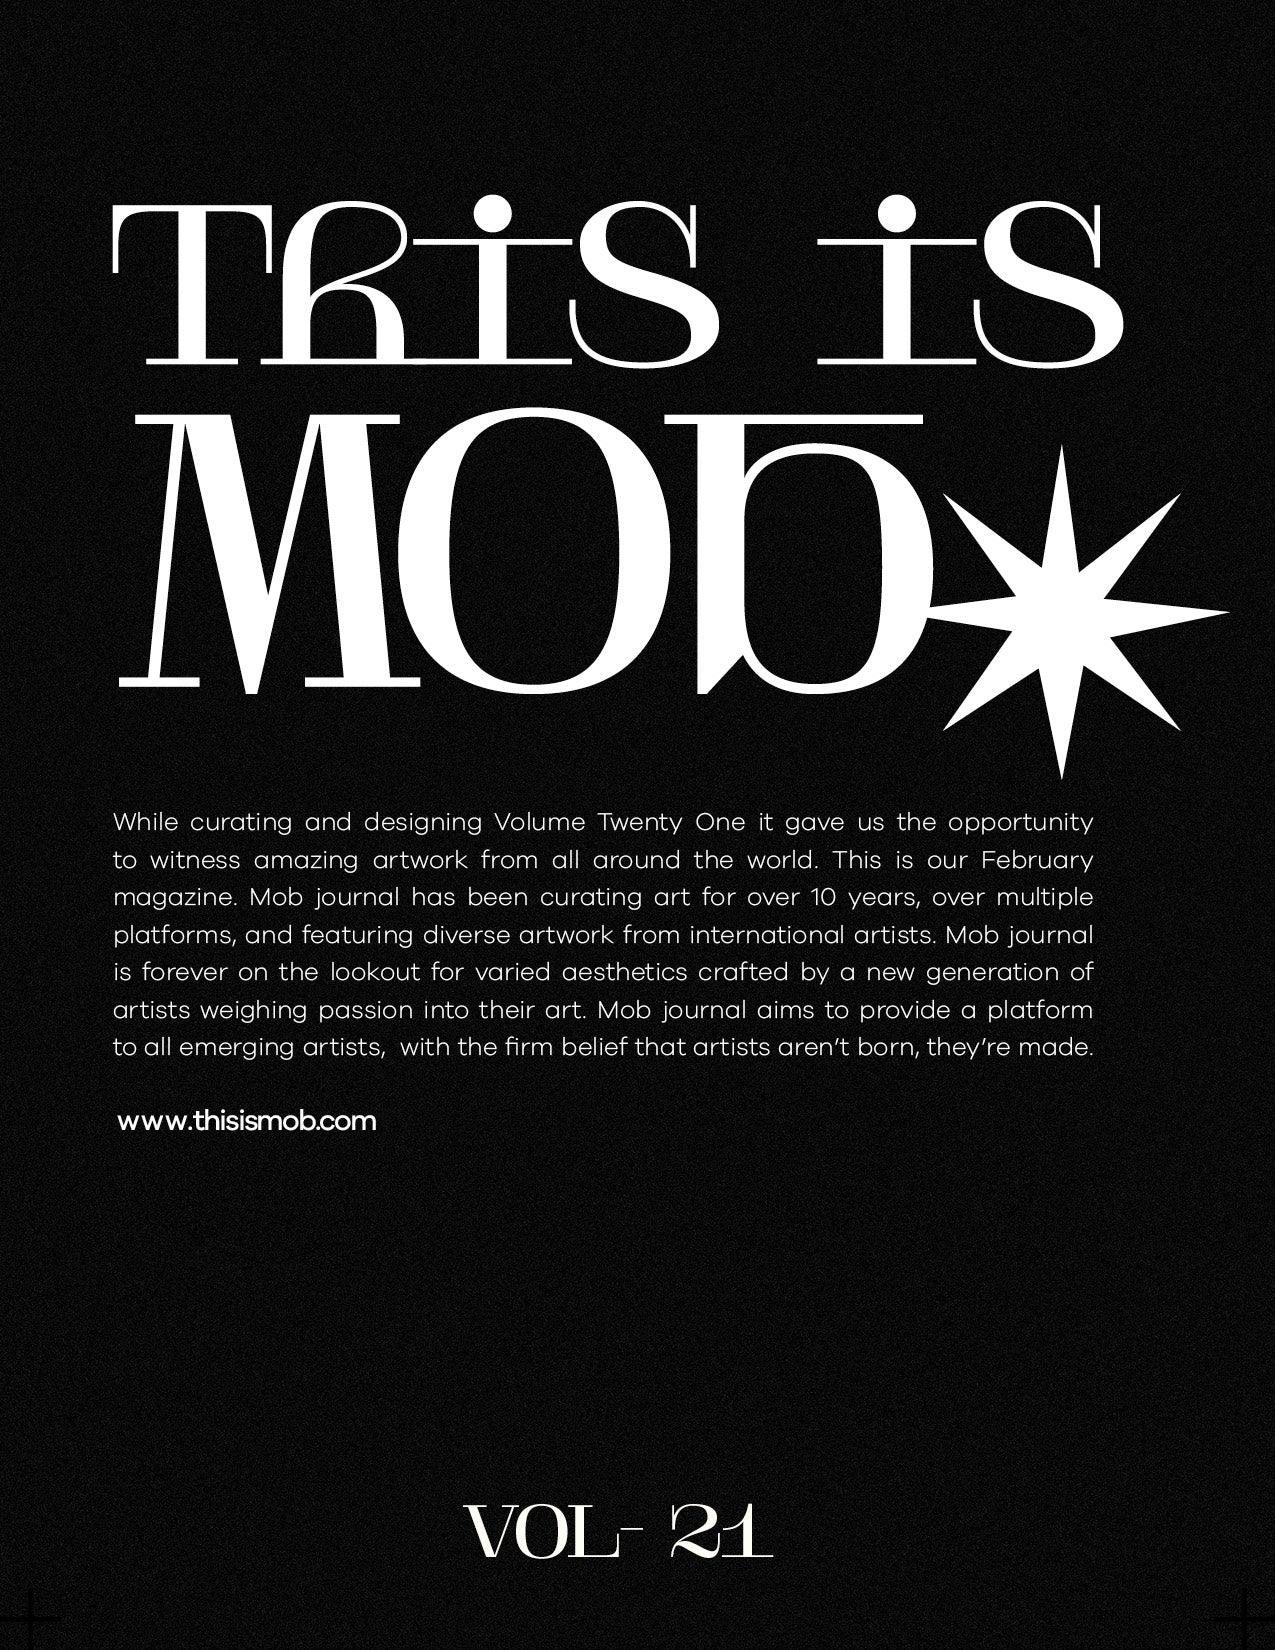 MOB JOURNAL | VOLUME TWENTY ONE | ISSUE #31 - Mob Journal